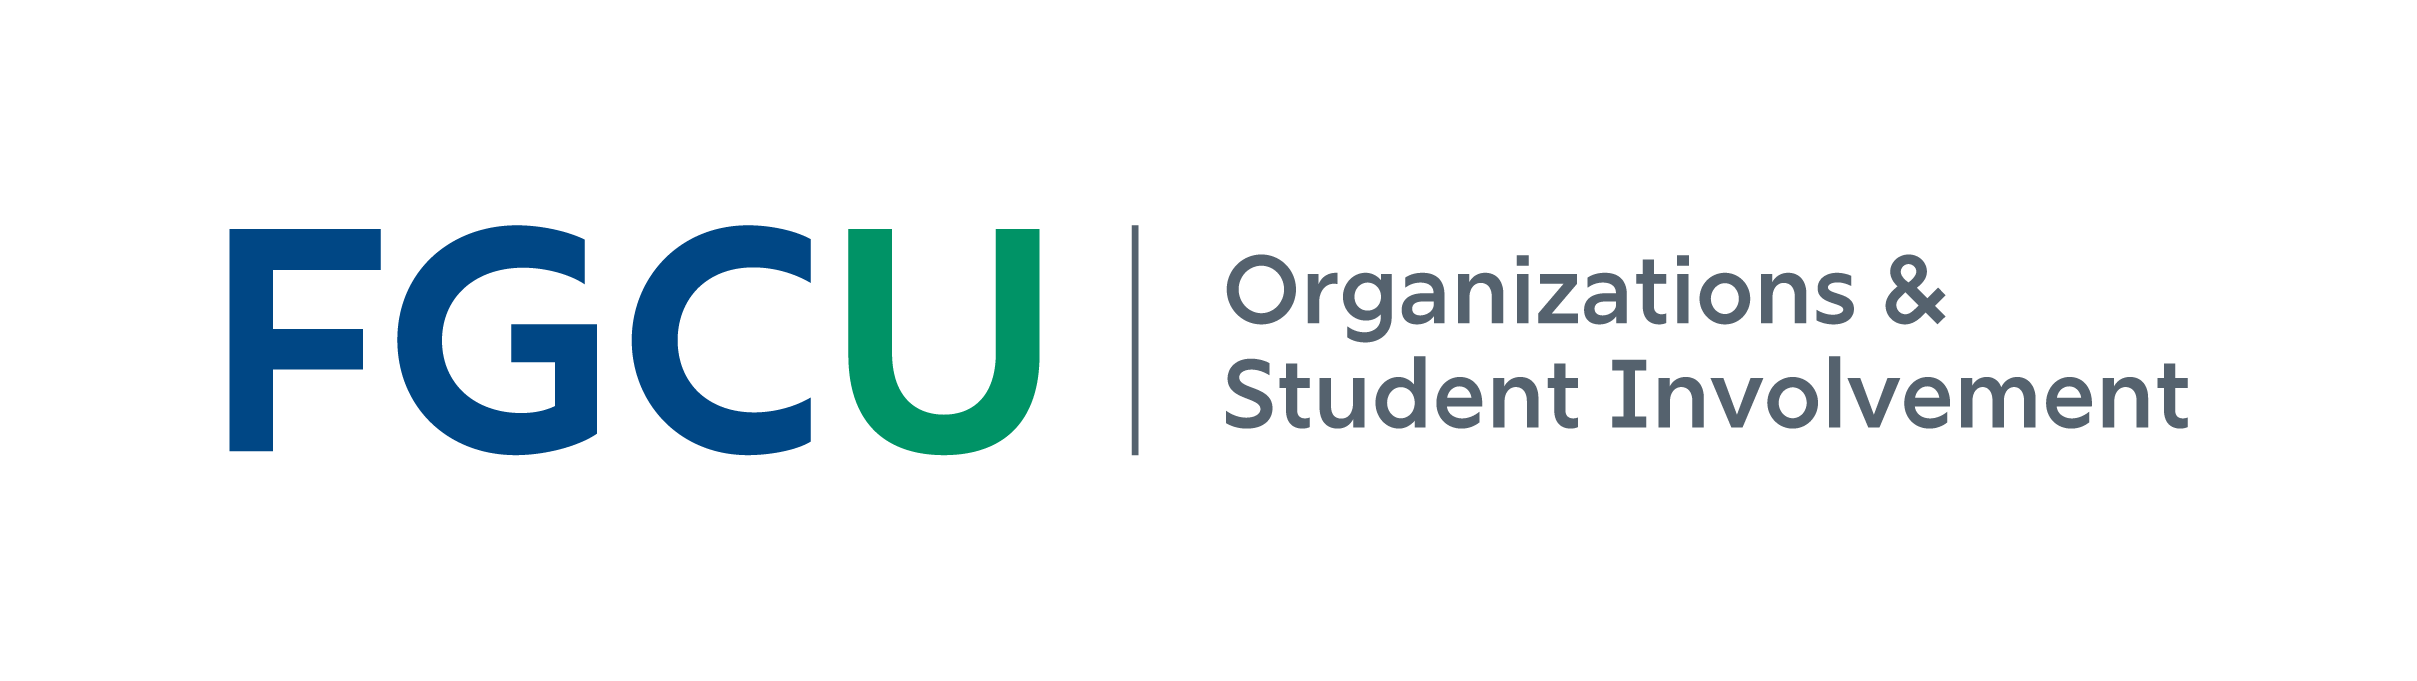 Office of Student Involvement logo